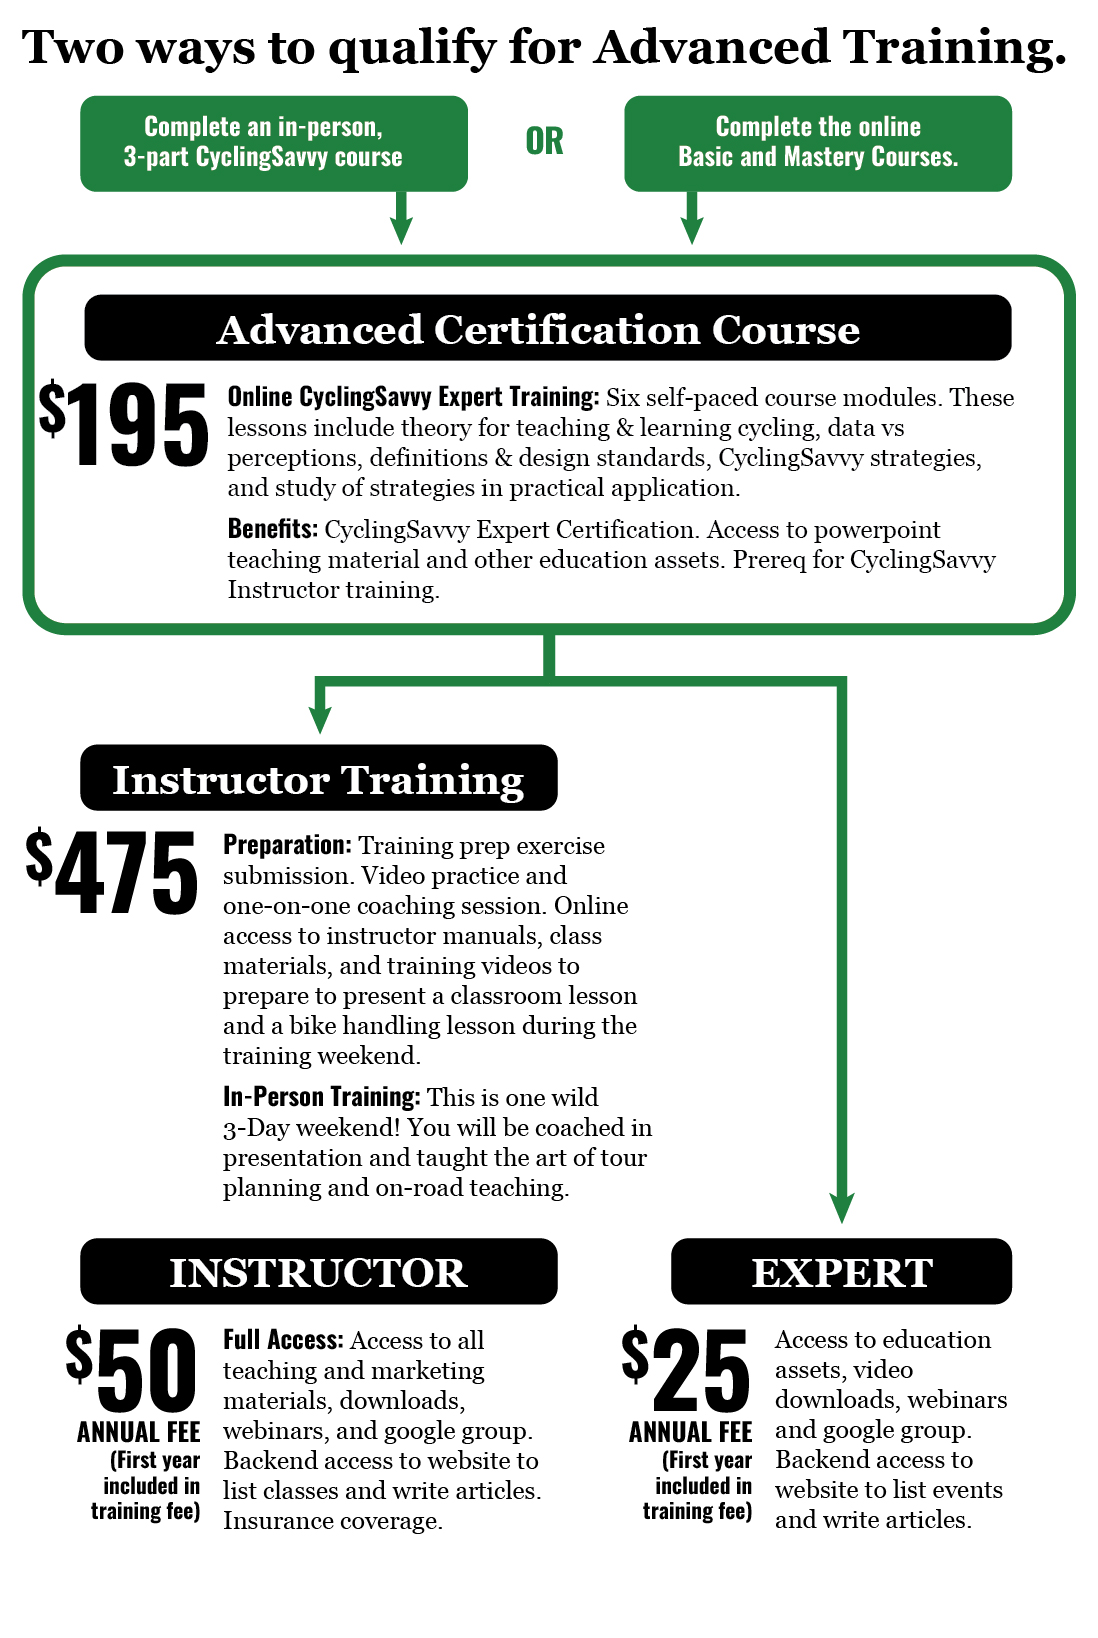 Advanced Certification process